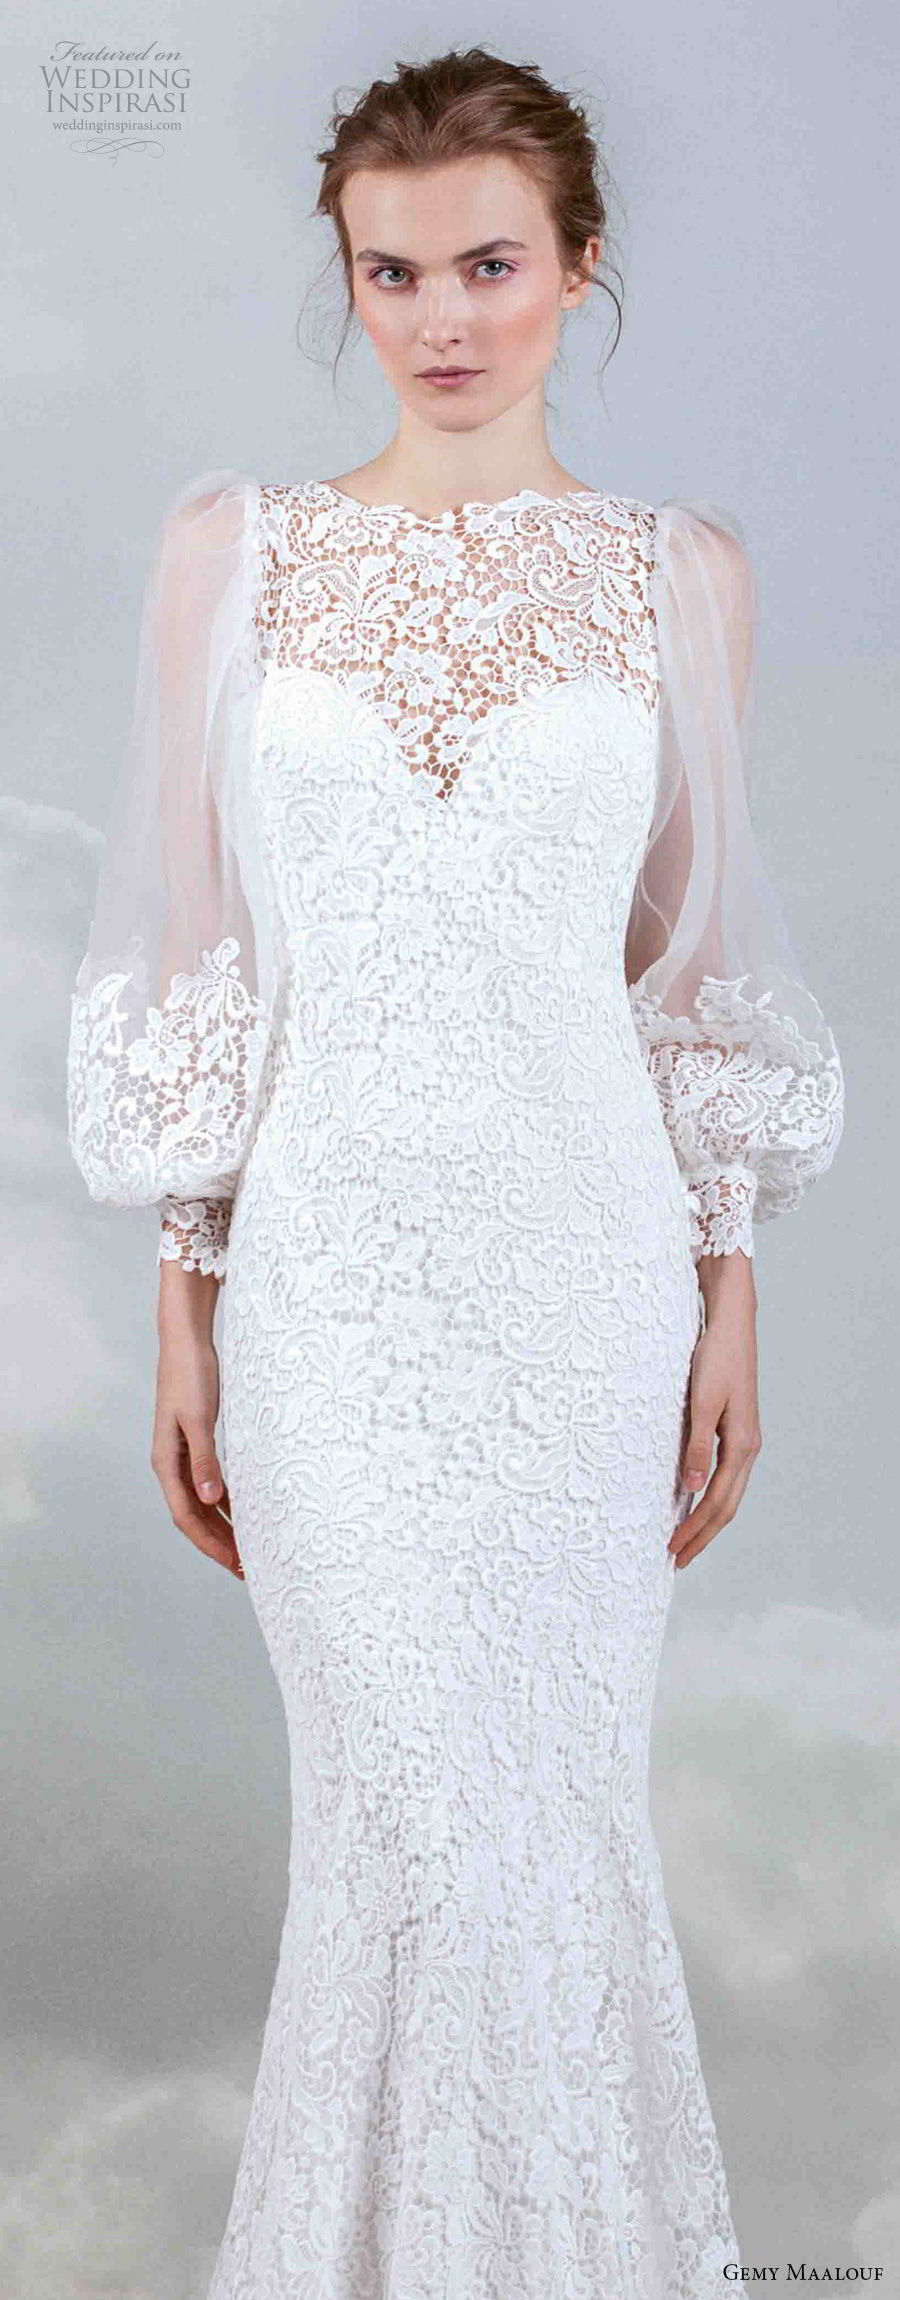 gemy maalouf 2019 bridal long bishop sleeves illusion bateau sweetheart neckline full embellishment elegant romantic fit and flare wedding dress sweep train (16) zv